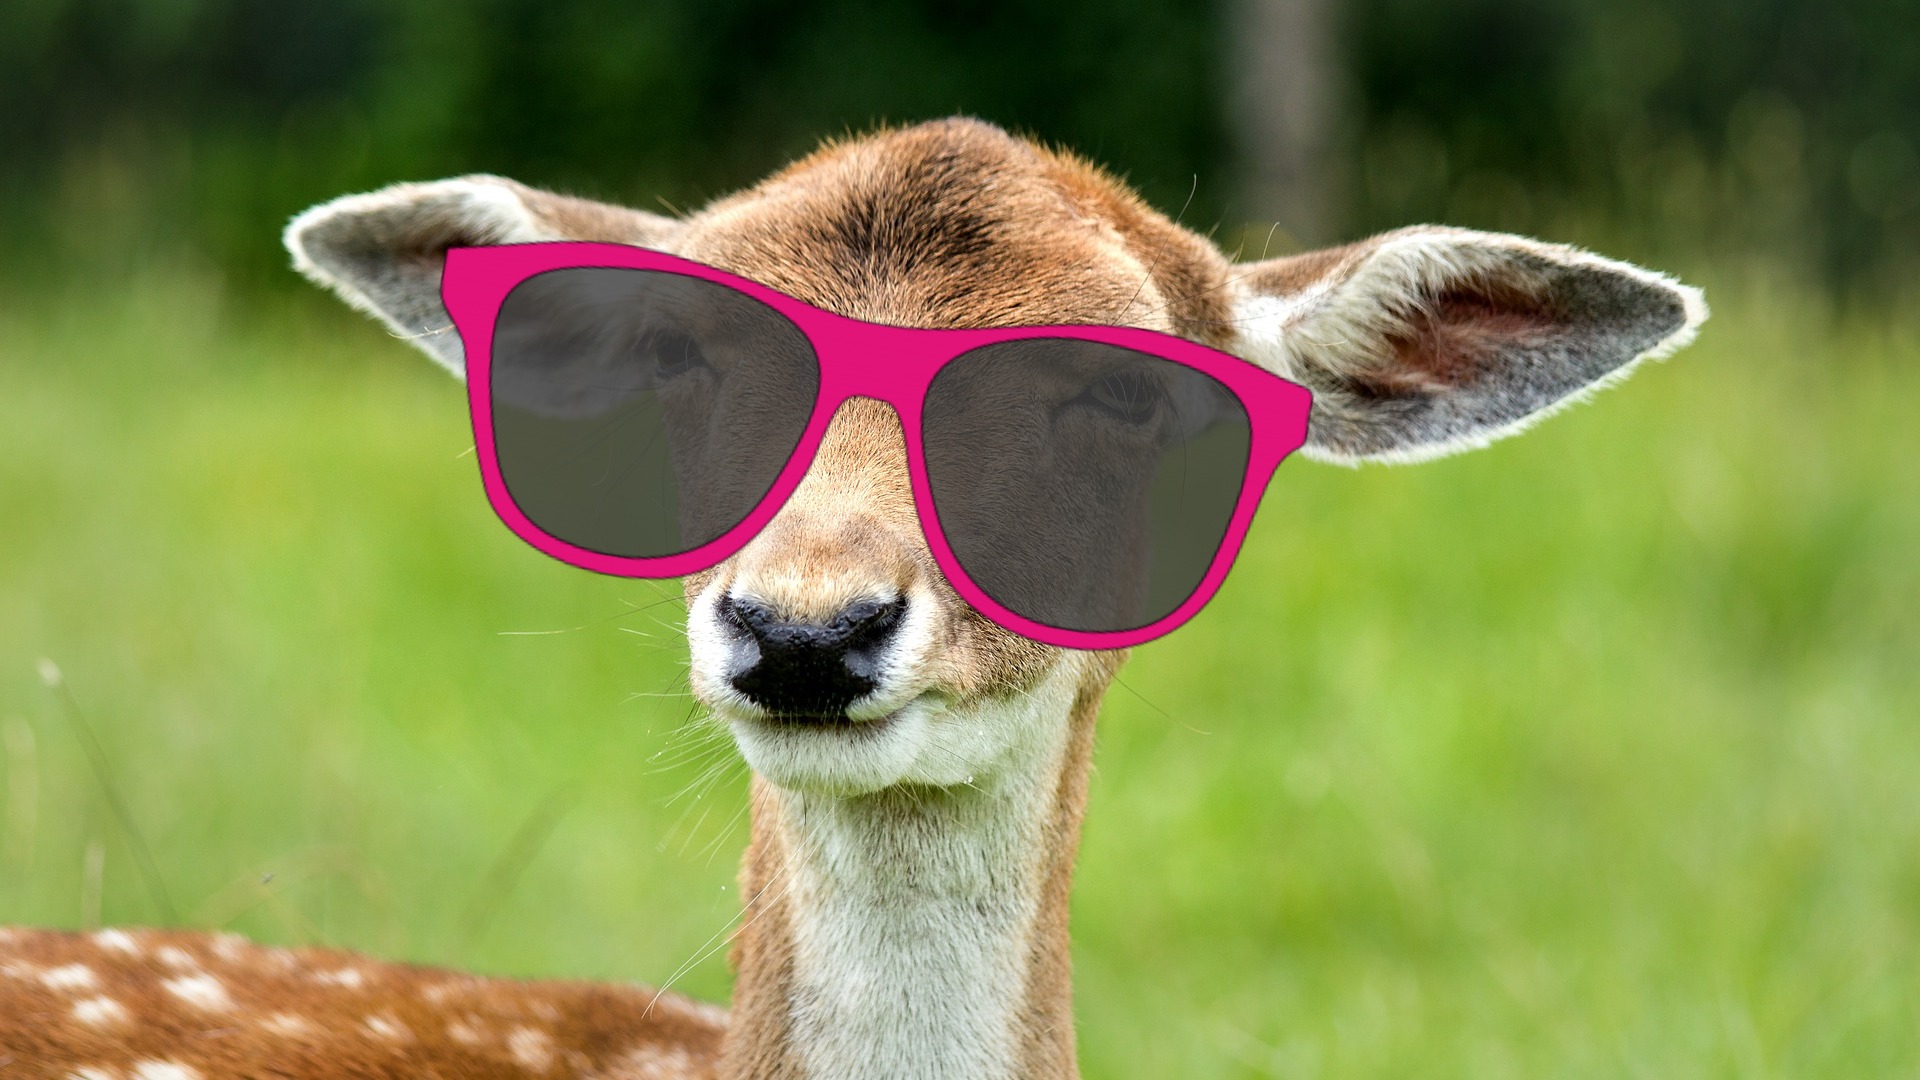 A deer with big ears wearing glasses